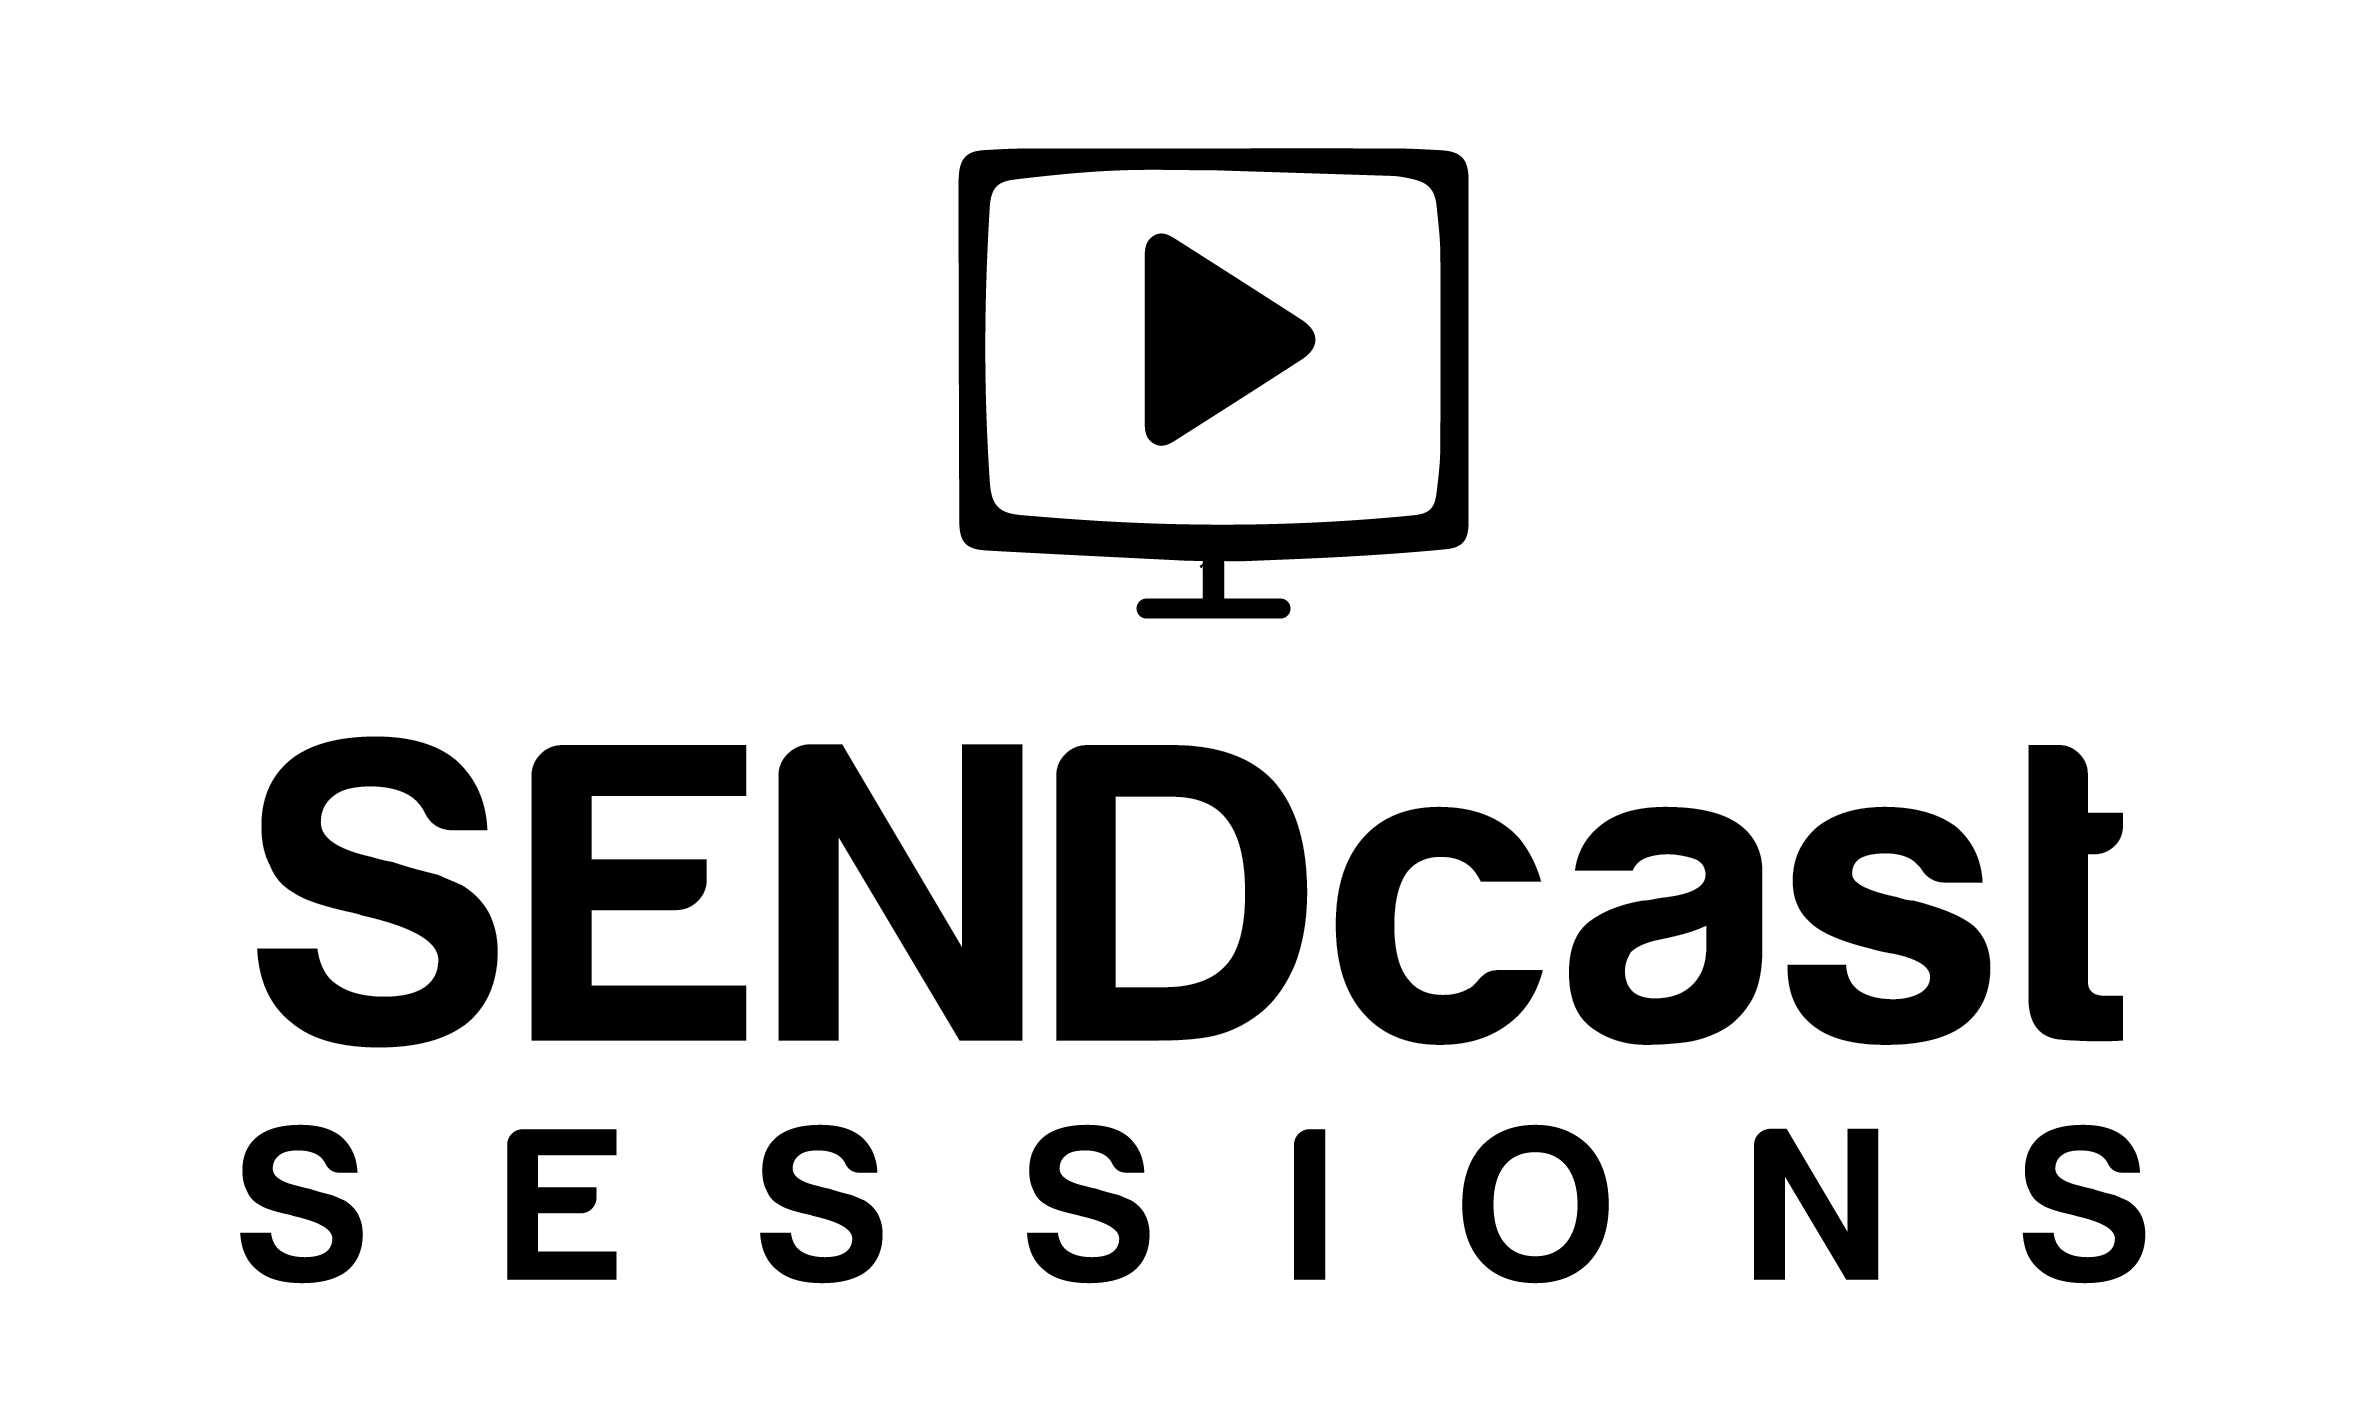 SENDcast sessions logo